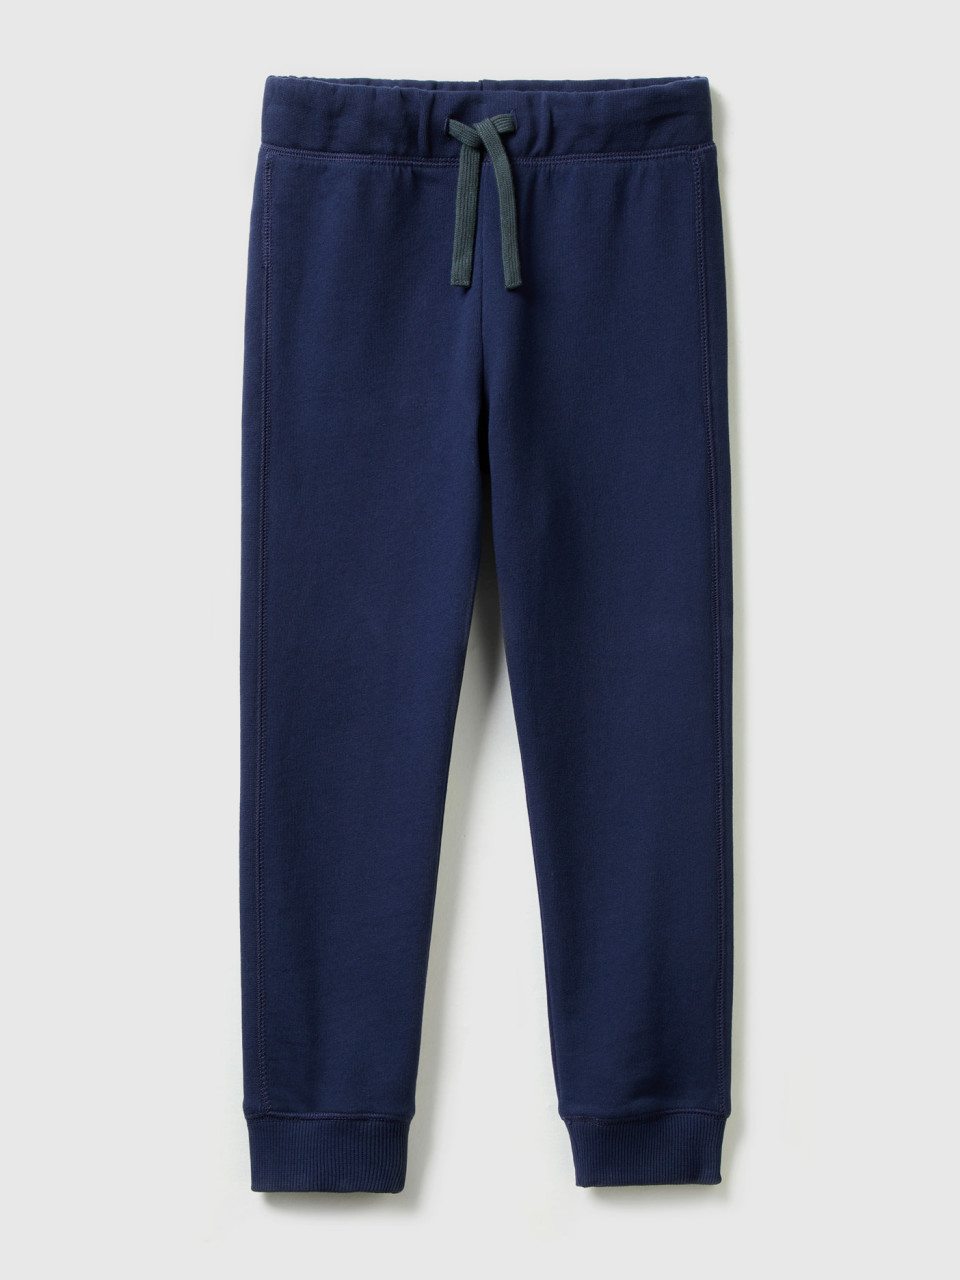 Benetton, 100% Cotton Sweatpants, Dark Blue, Kids